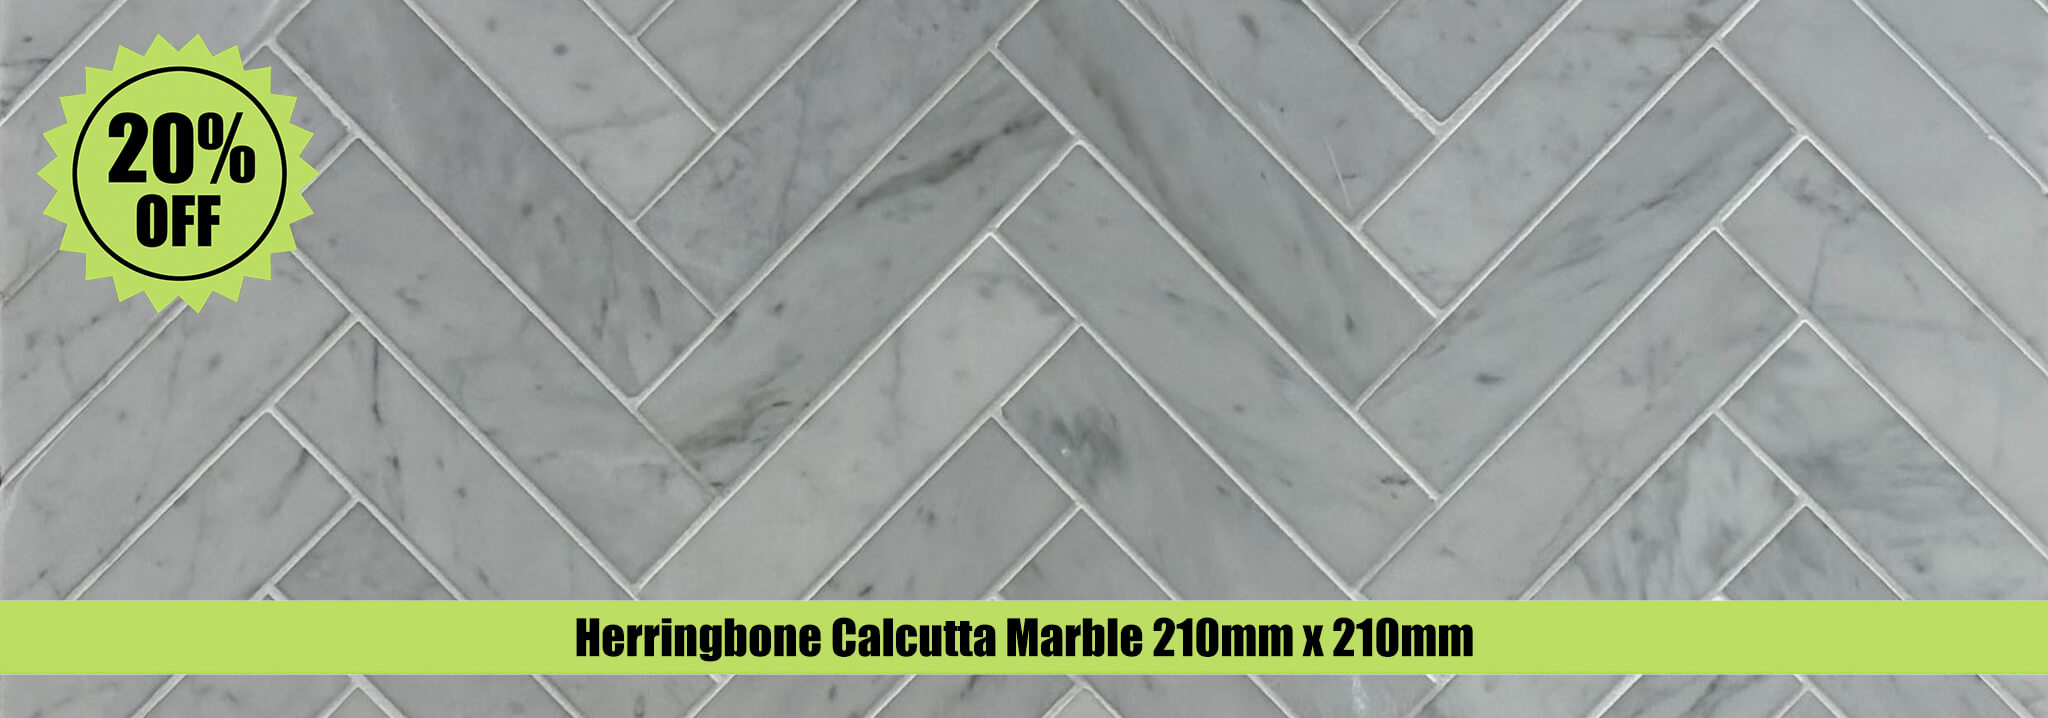 Herringbone Calcutta Marble